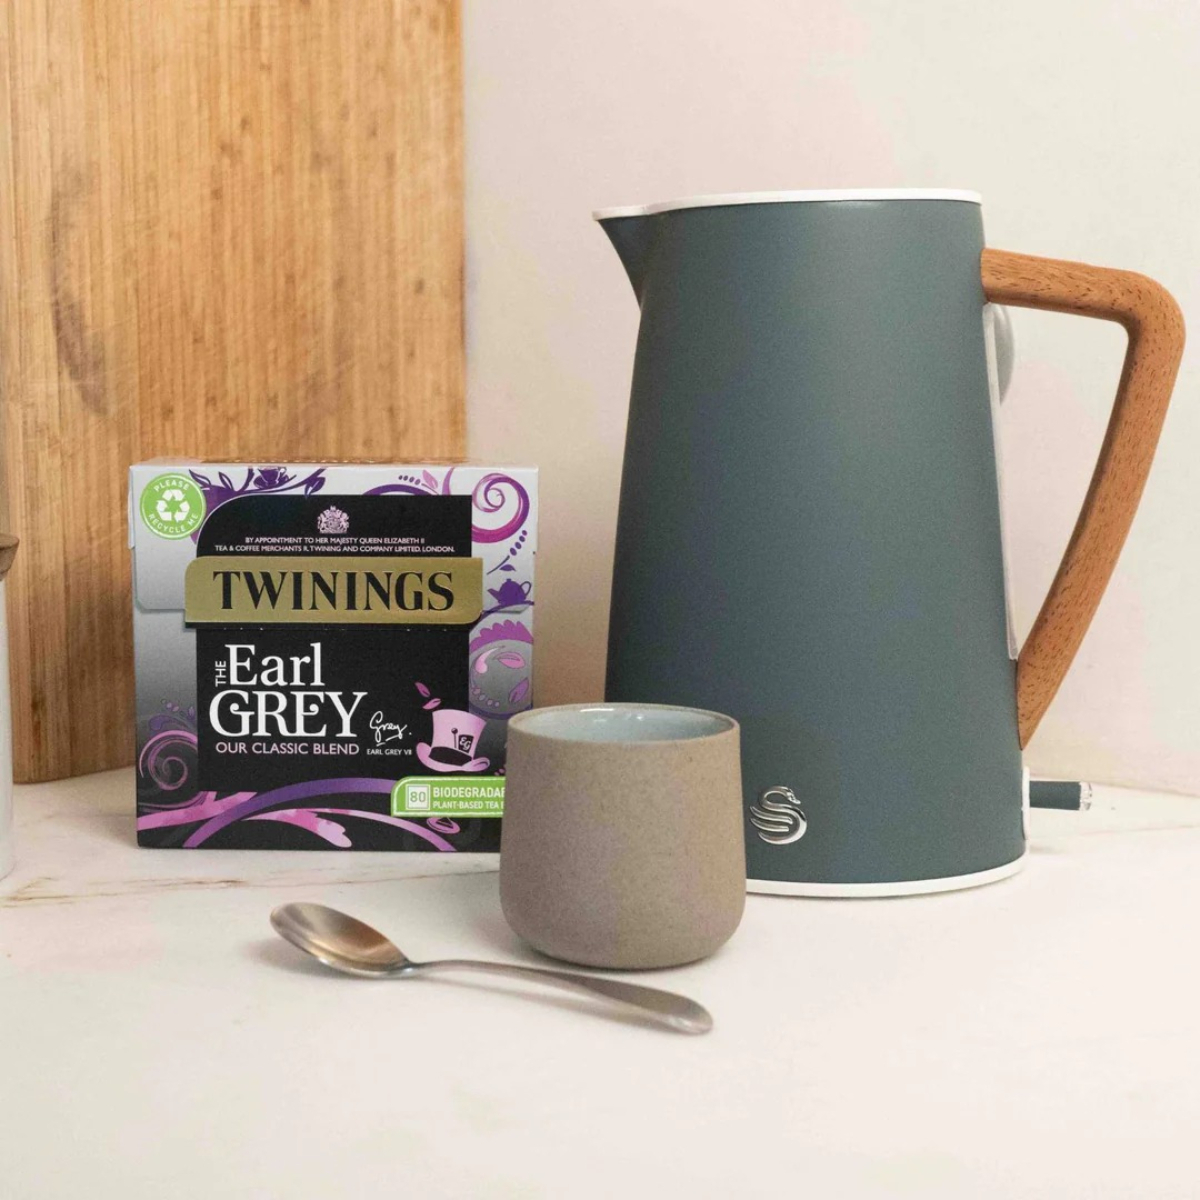 Twinings Earl Grey Tea 40 Teabags